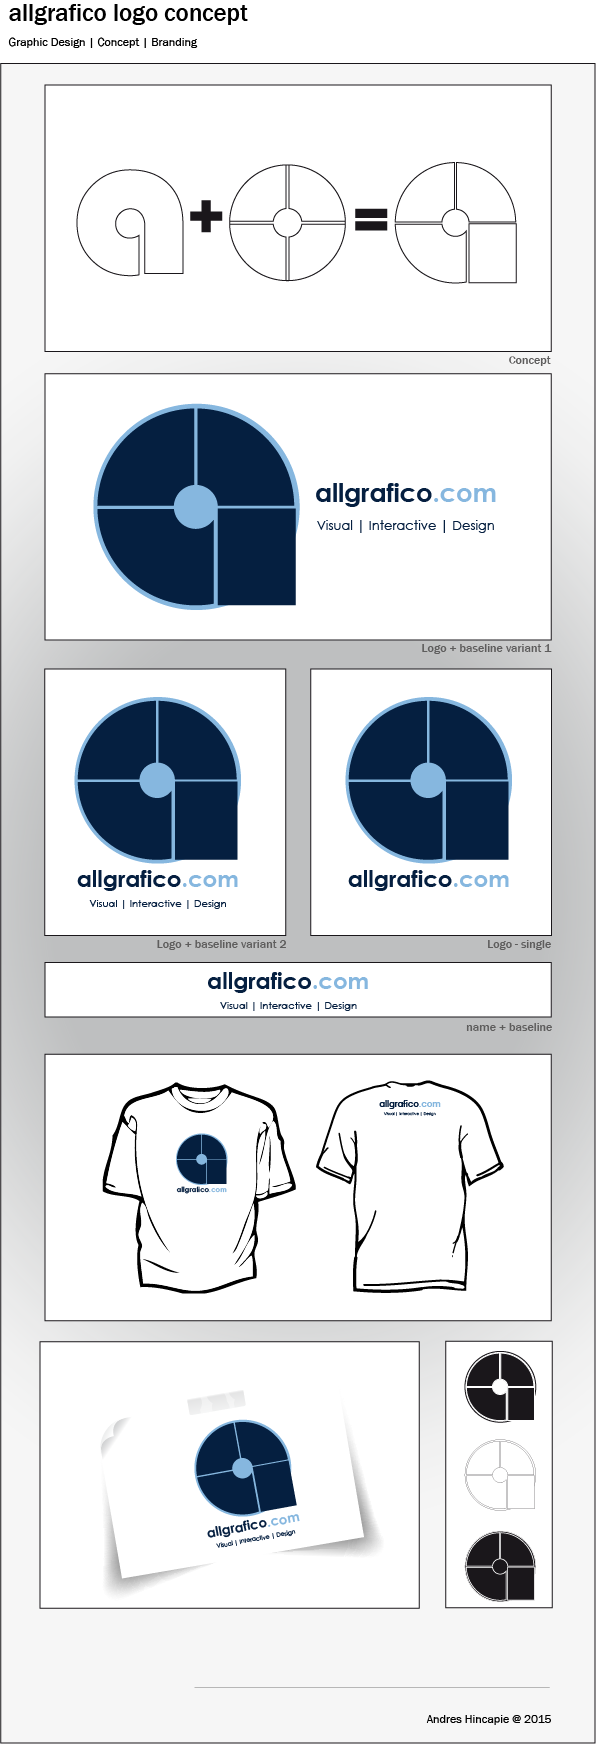 allgrafico logo concept